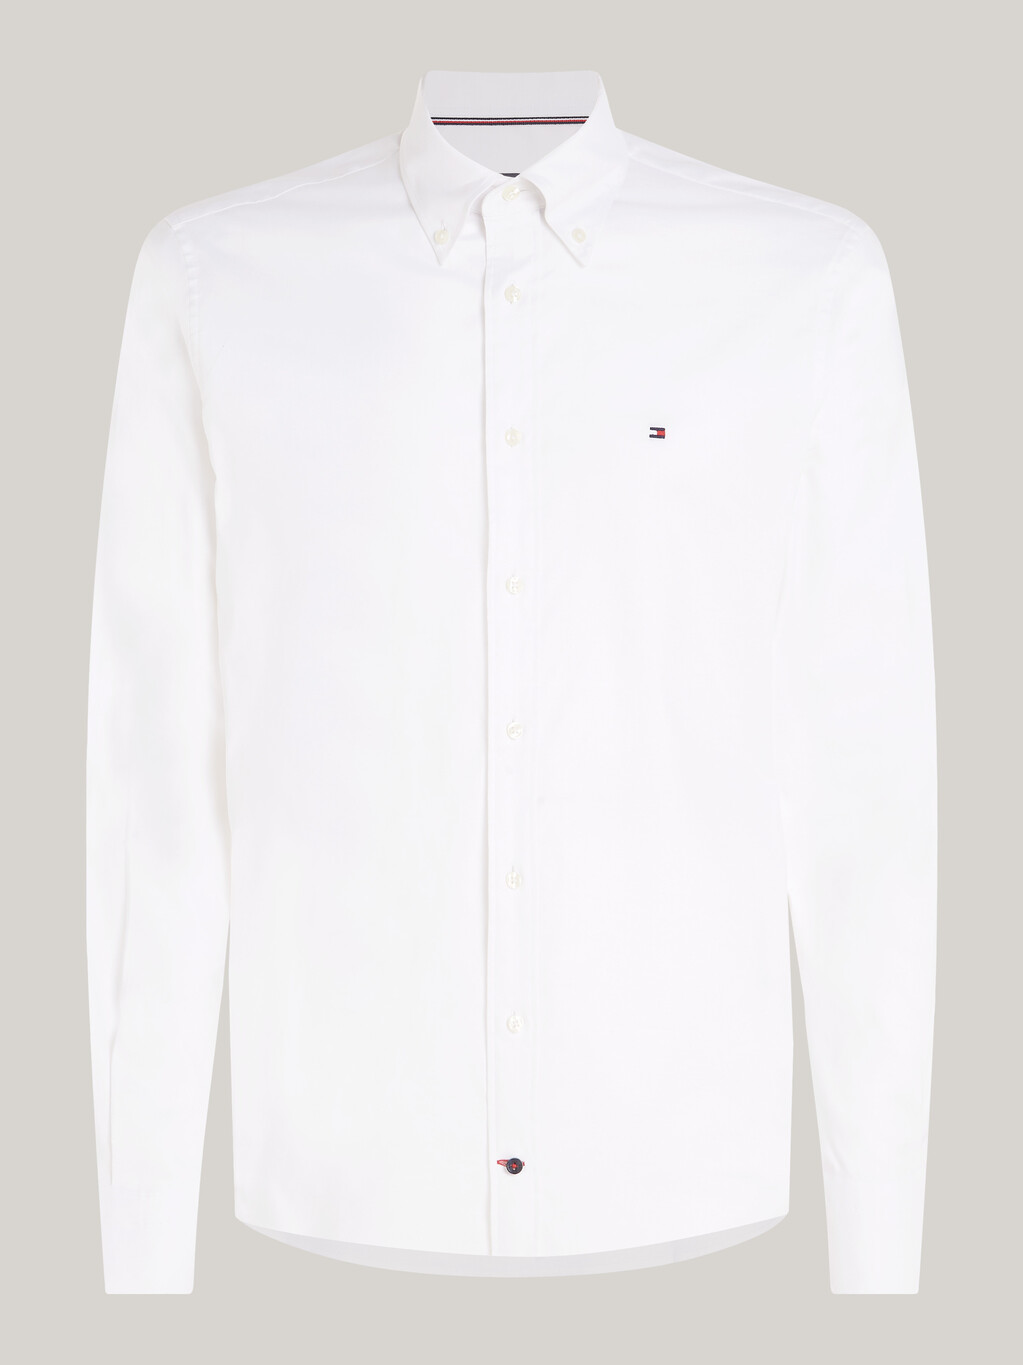 TH Flex 常規版型牛津襯衫, White, hi-res